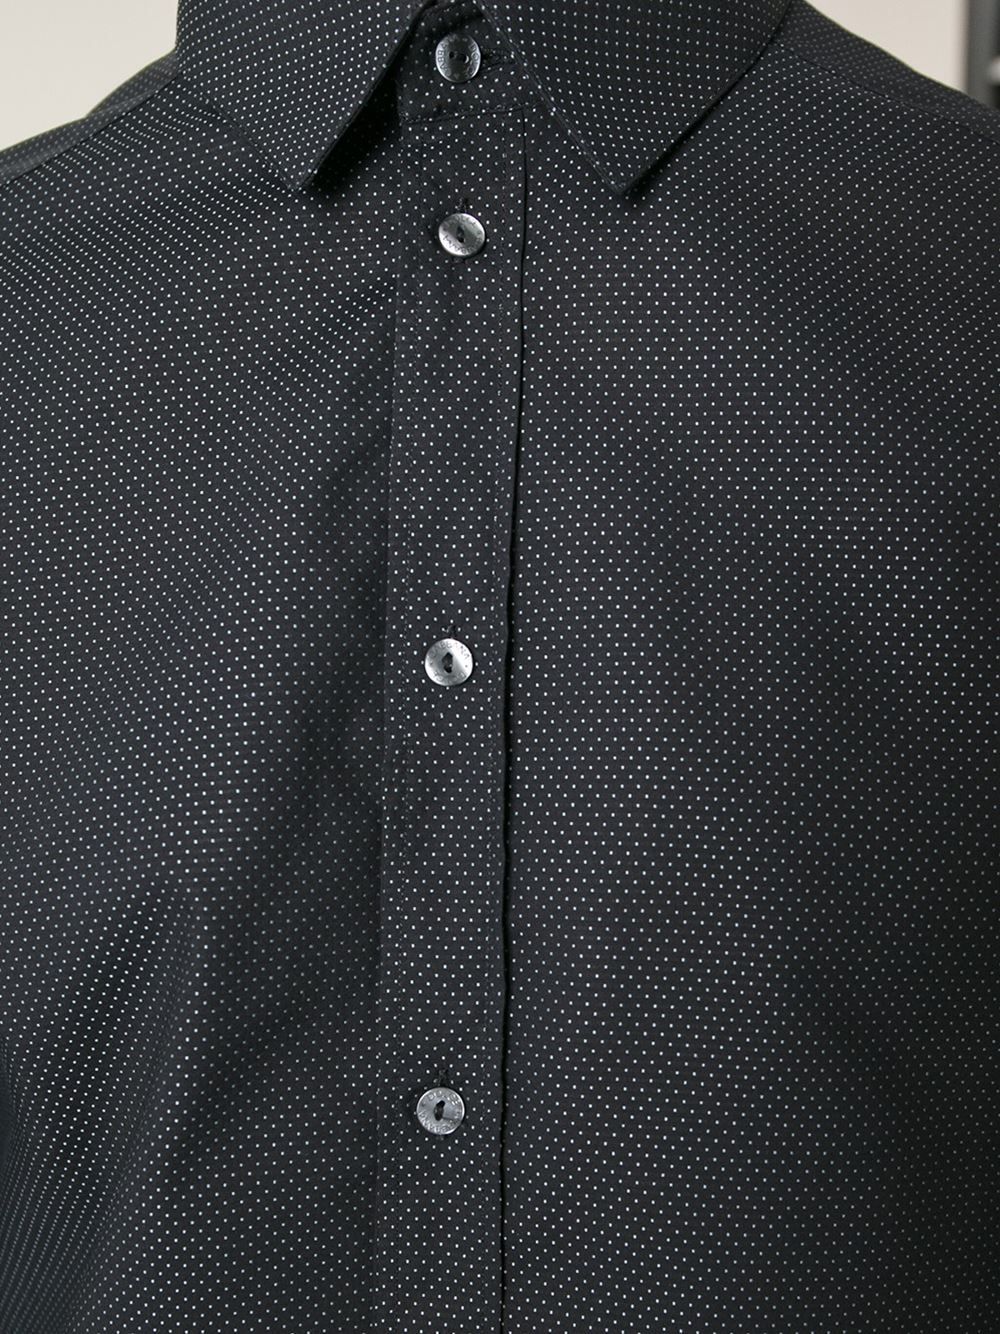 Dolce & Gabbana Gold-Fit Polka-Dot Jacquard Cotton Shirt in Black for ...